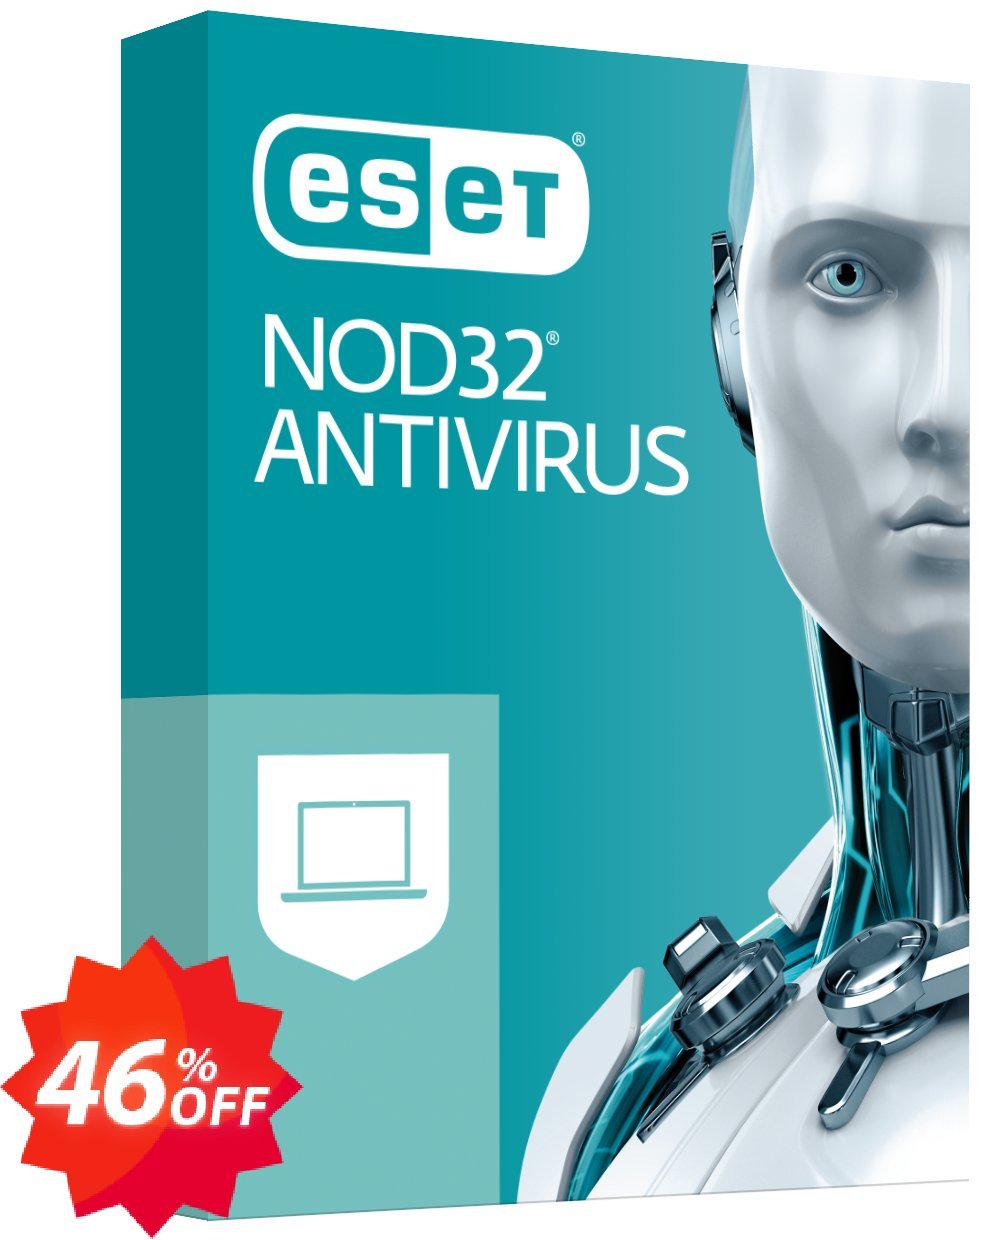 ESET NOD32 Antivirus - Renew 2 Years 3 Devices Coupon code 46% discount 